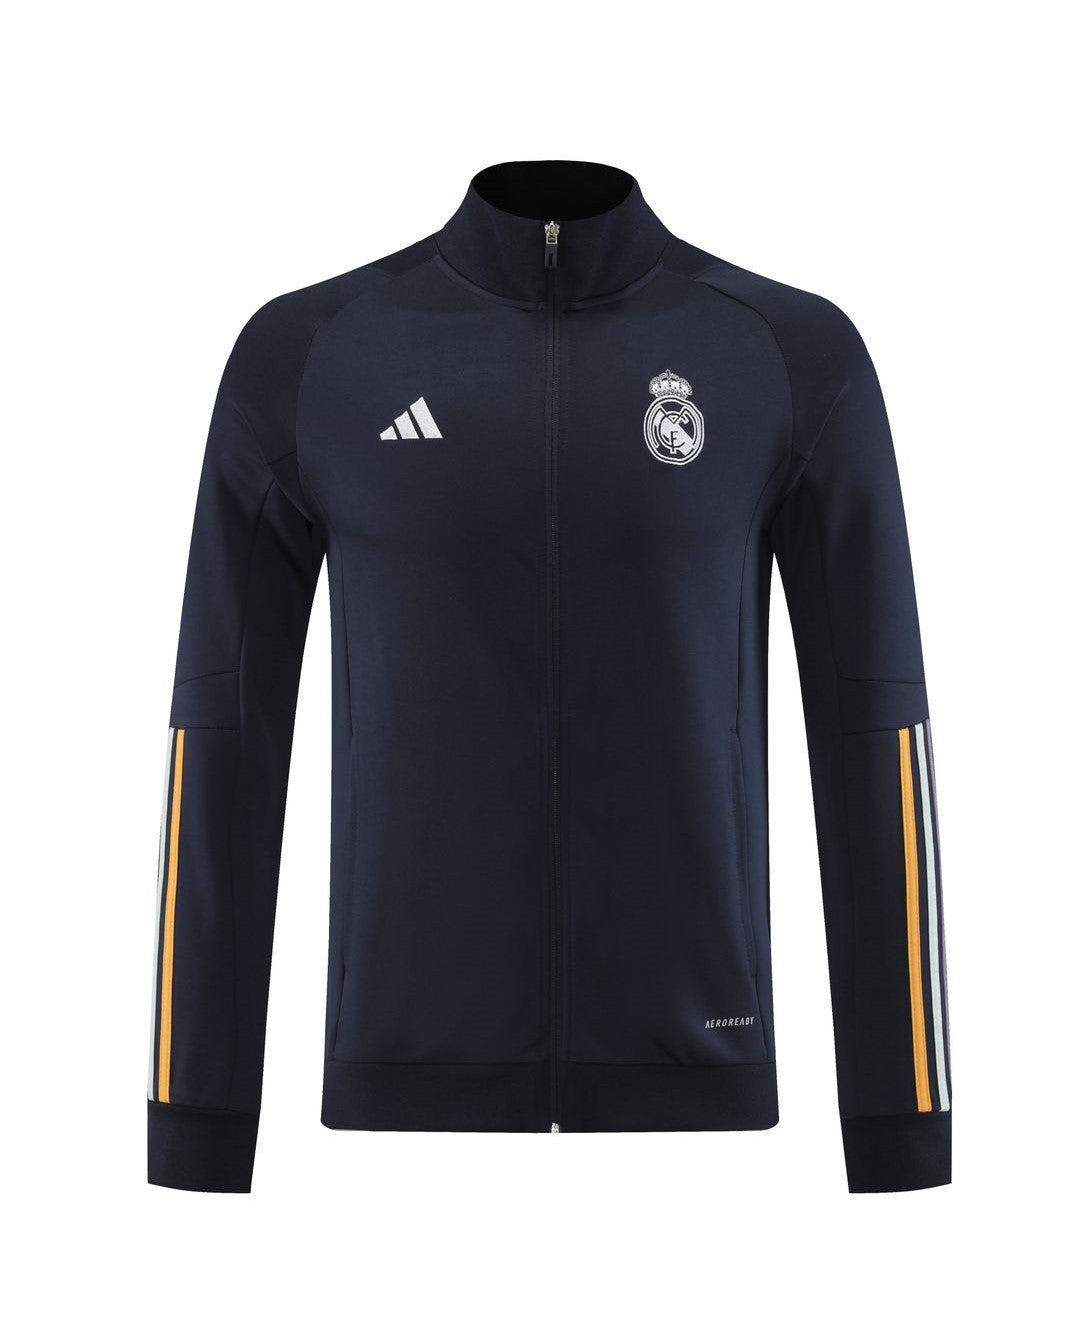 Real Madrid Navy Blue Jacket 23 24 Season